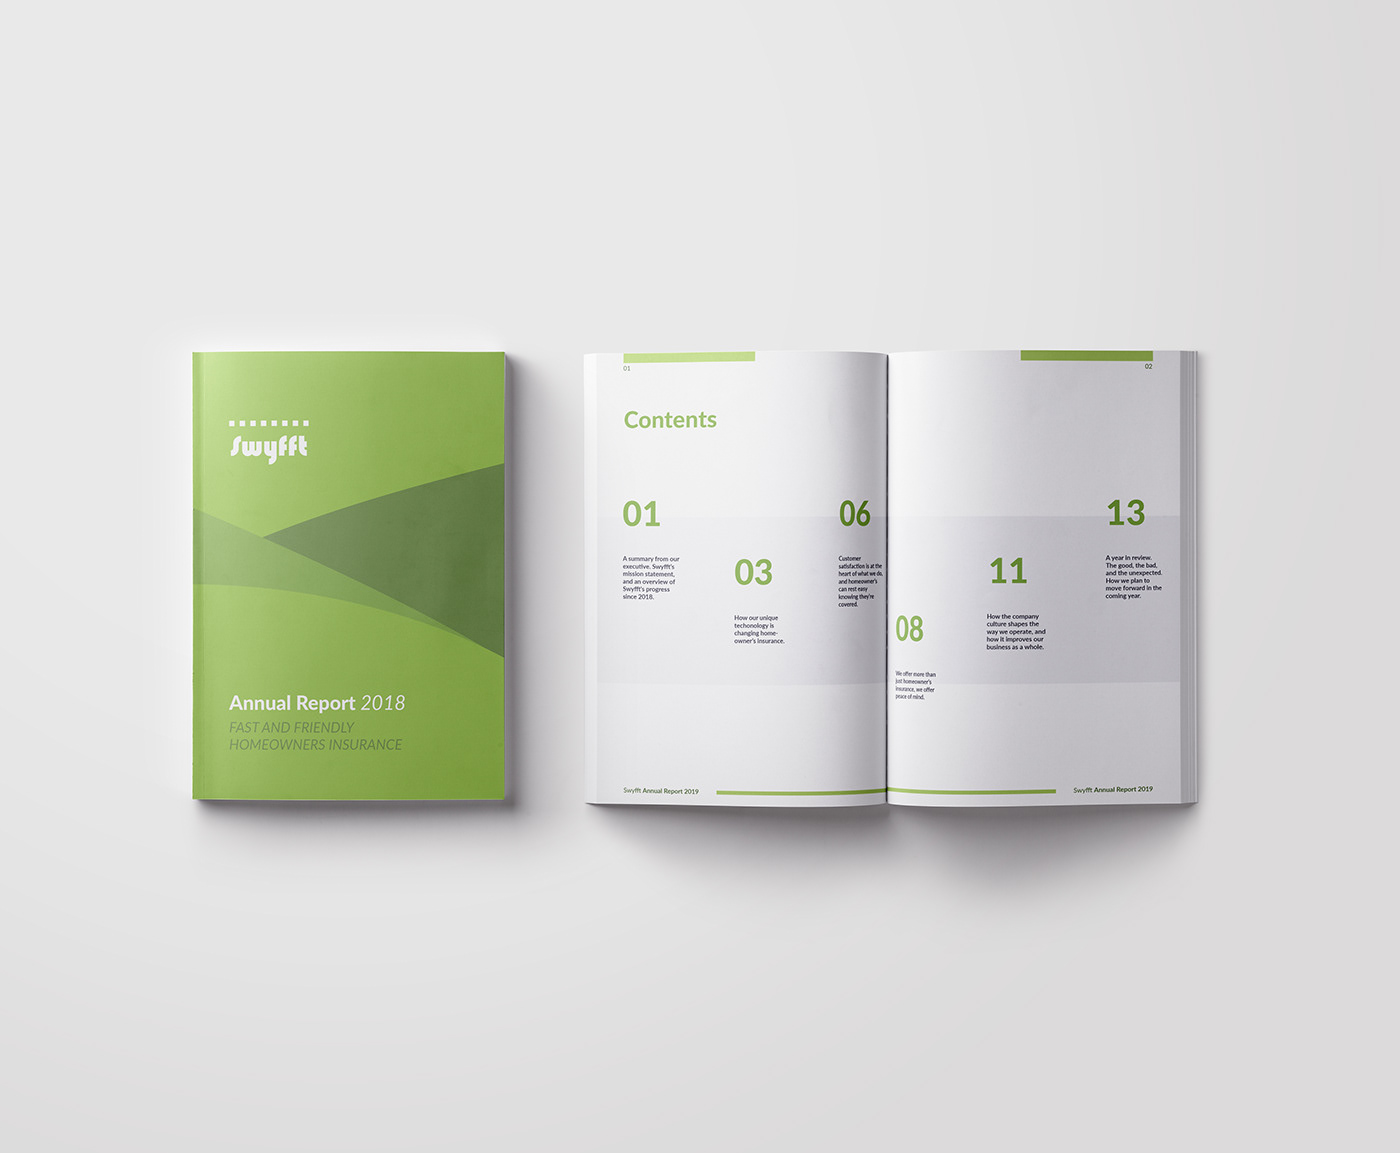 Contented дизайн. Annual Report. Годовой отчет дизайн. Годовой отчет дизайн каталога. Примеры дизайна годовых отчетов.